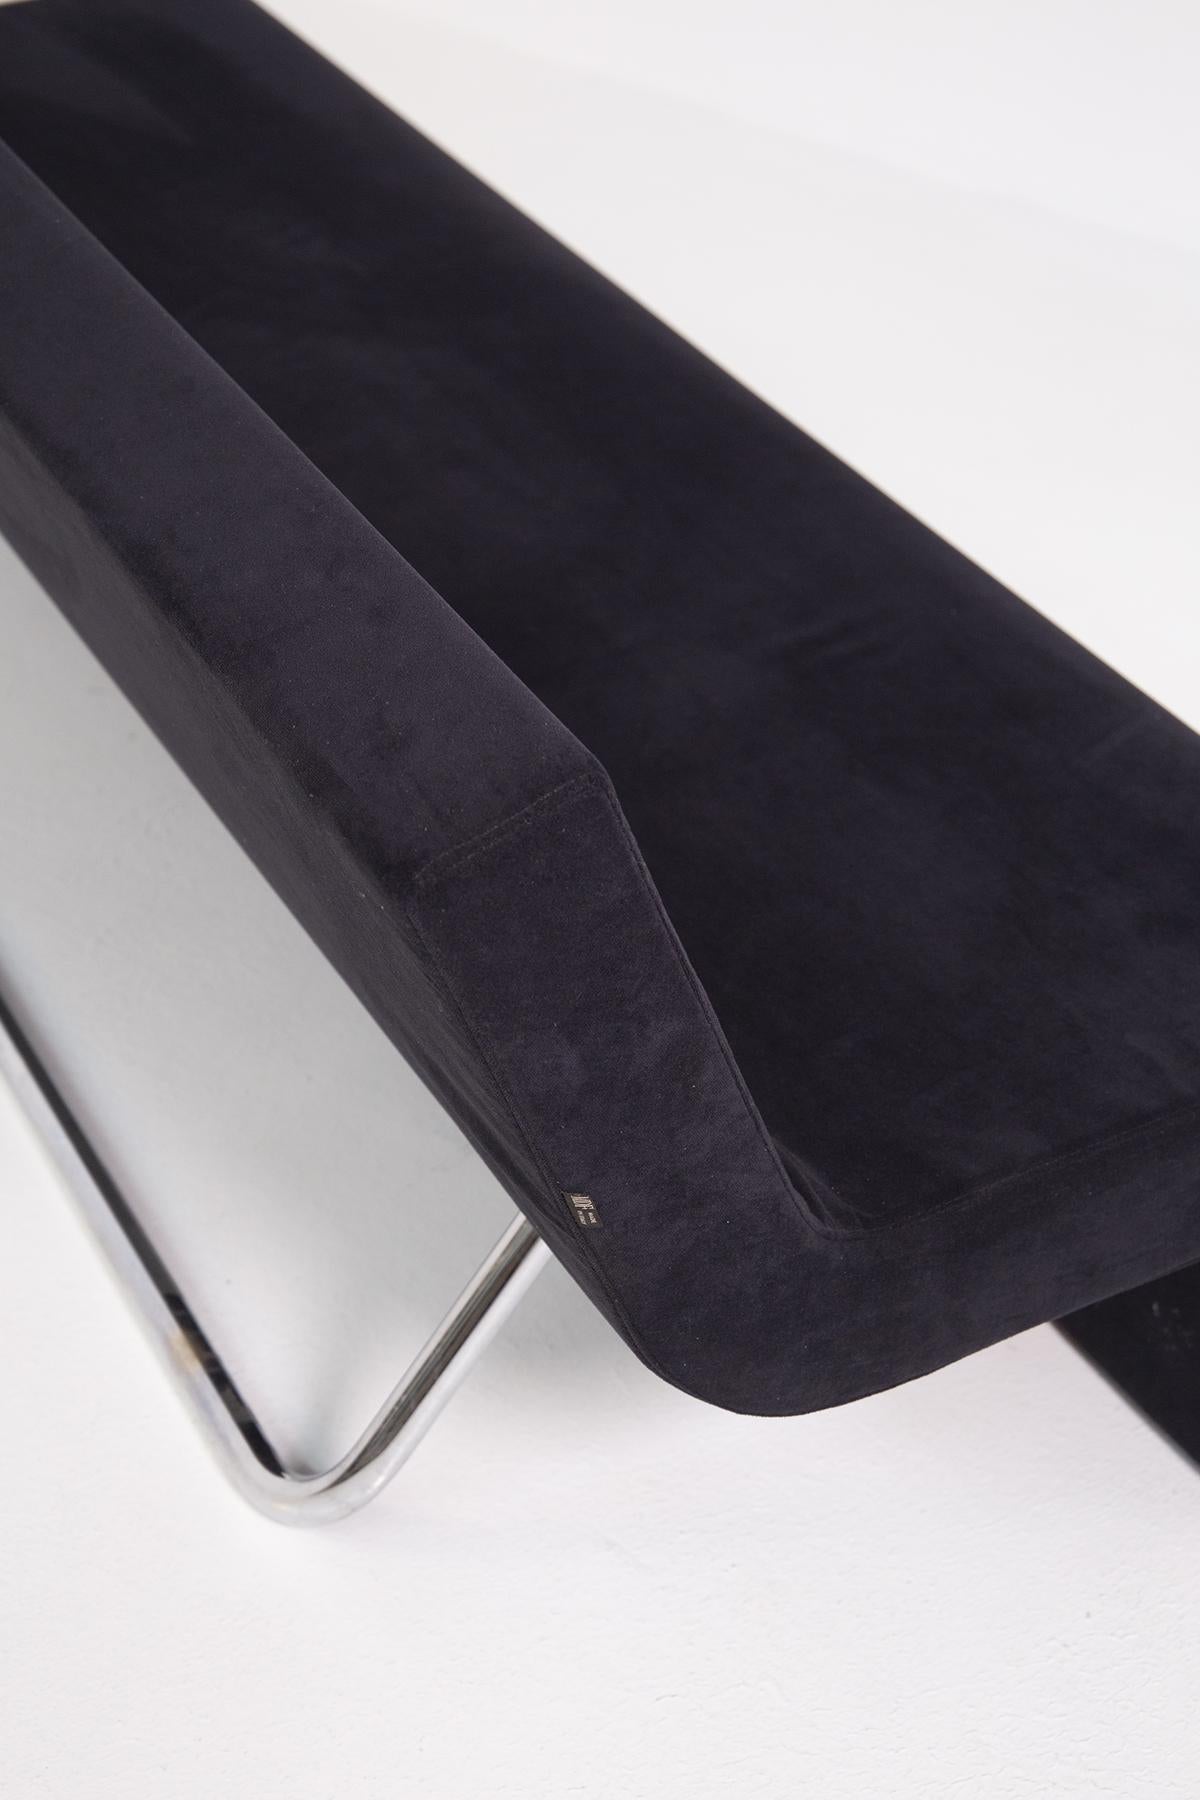 Italian Sofa in Black Velvet and Steel by MDF Italia For Sale 7